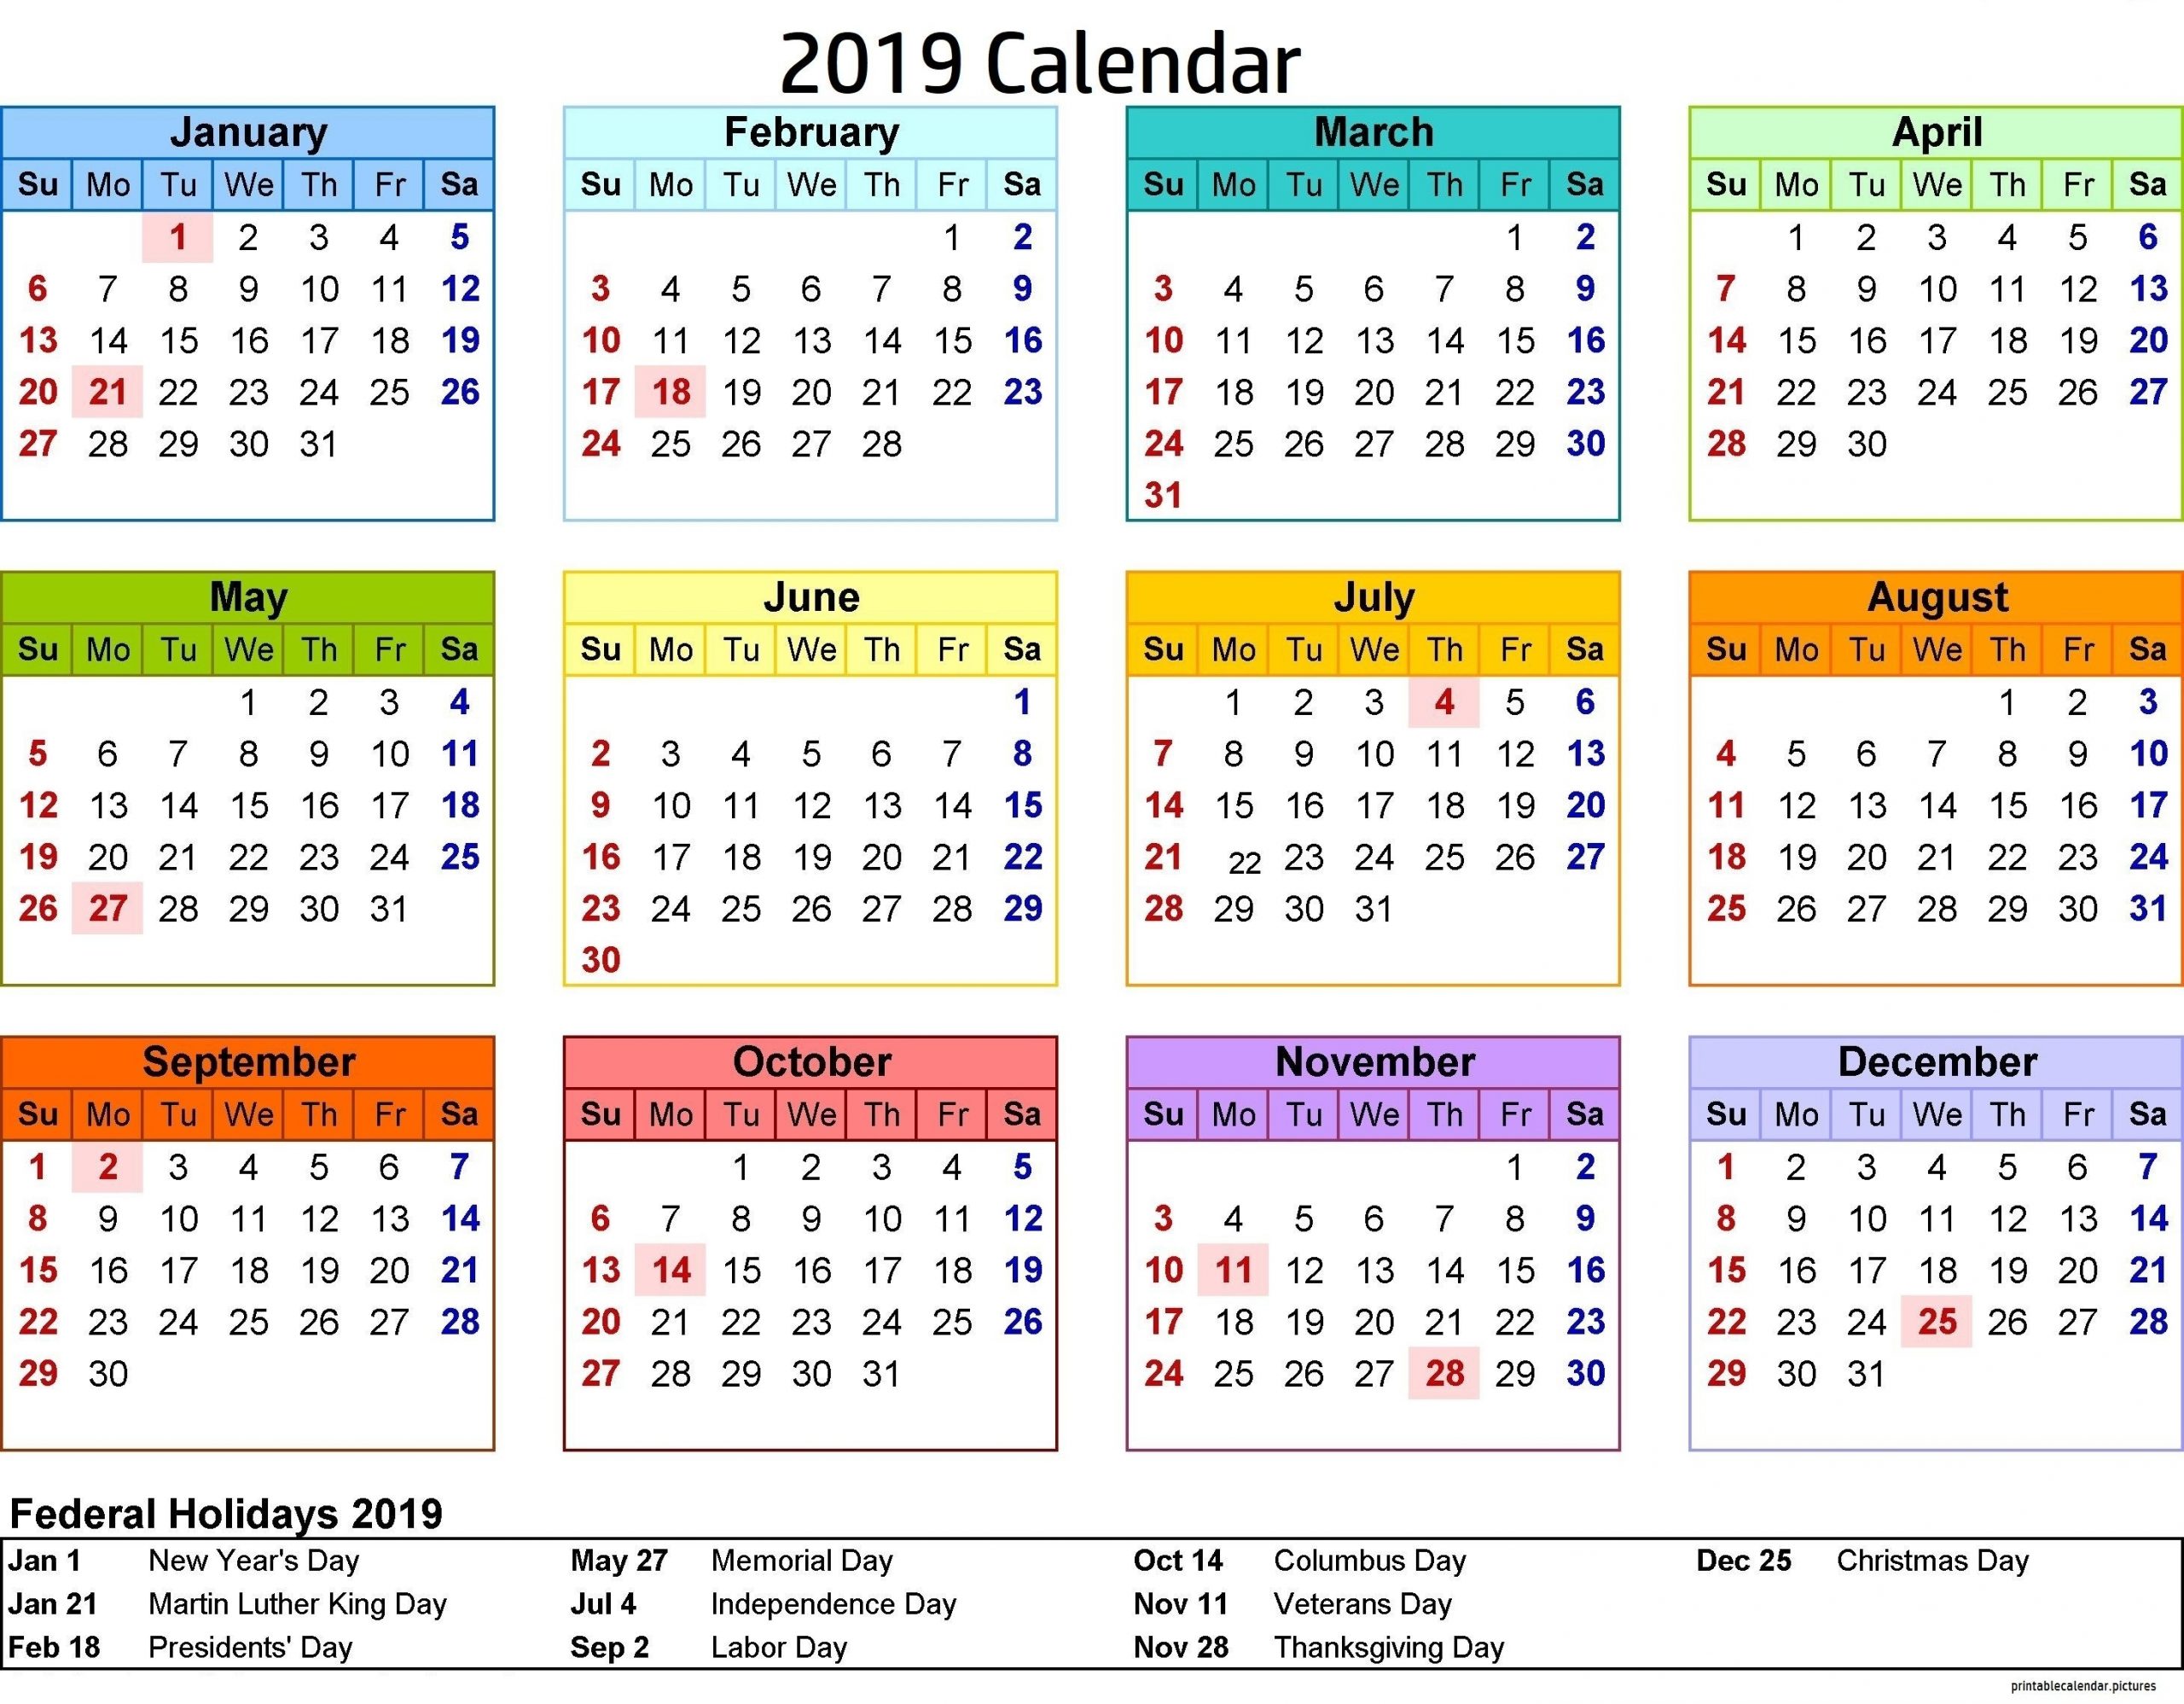 Pick 2021 Philippine Calendar With Holidays